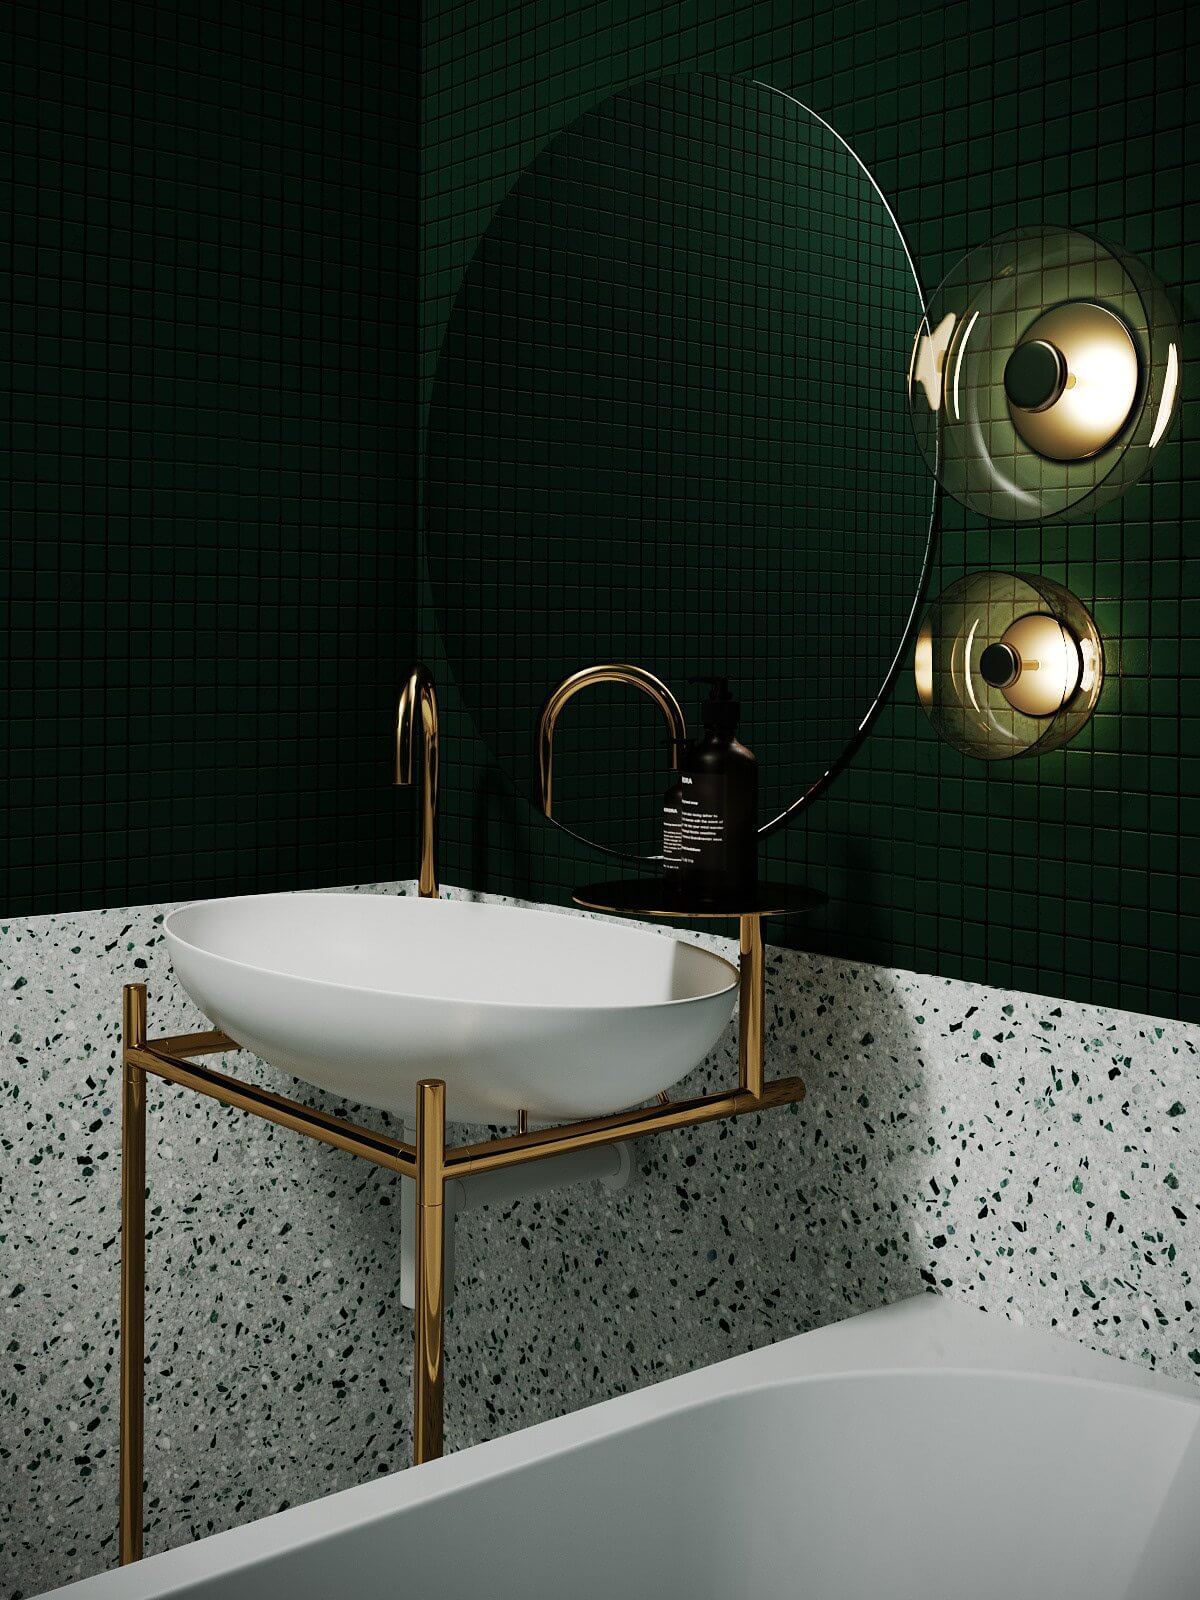 New York concept house bathroom sink - cgi visualization